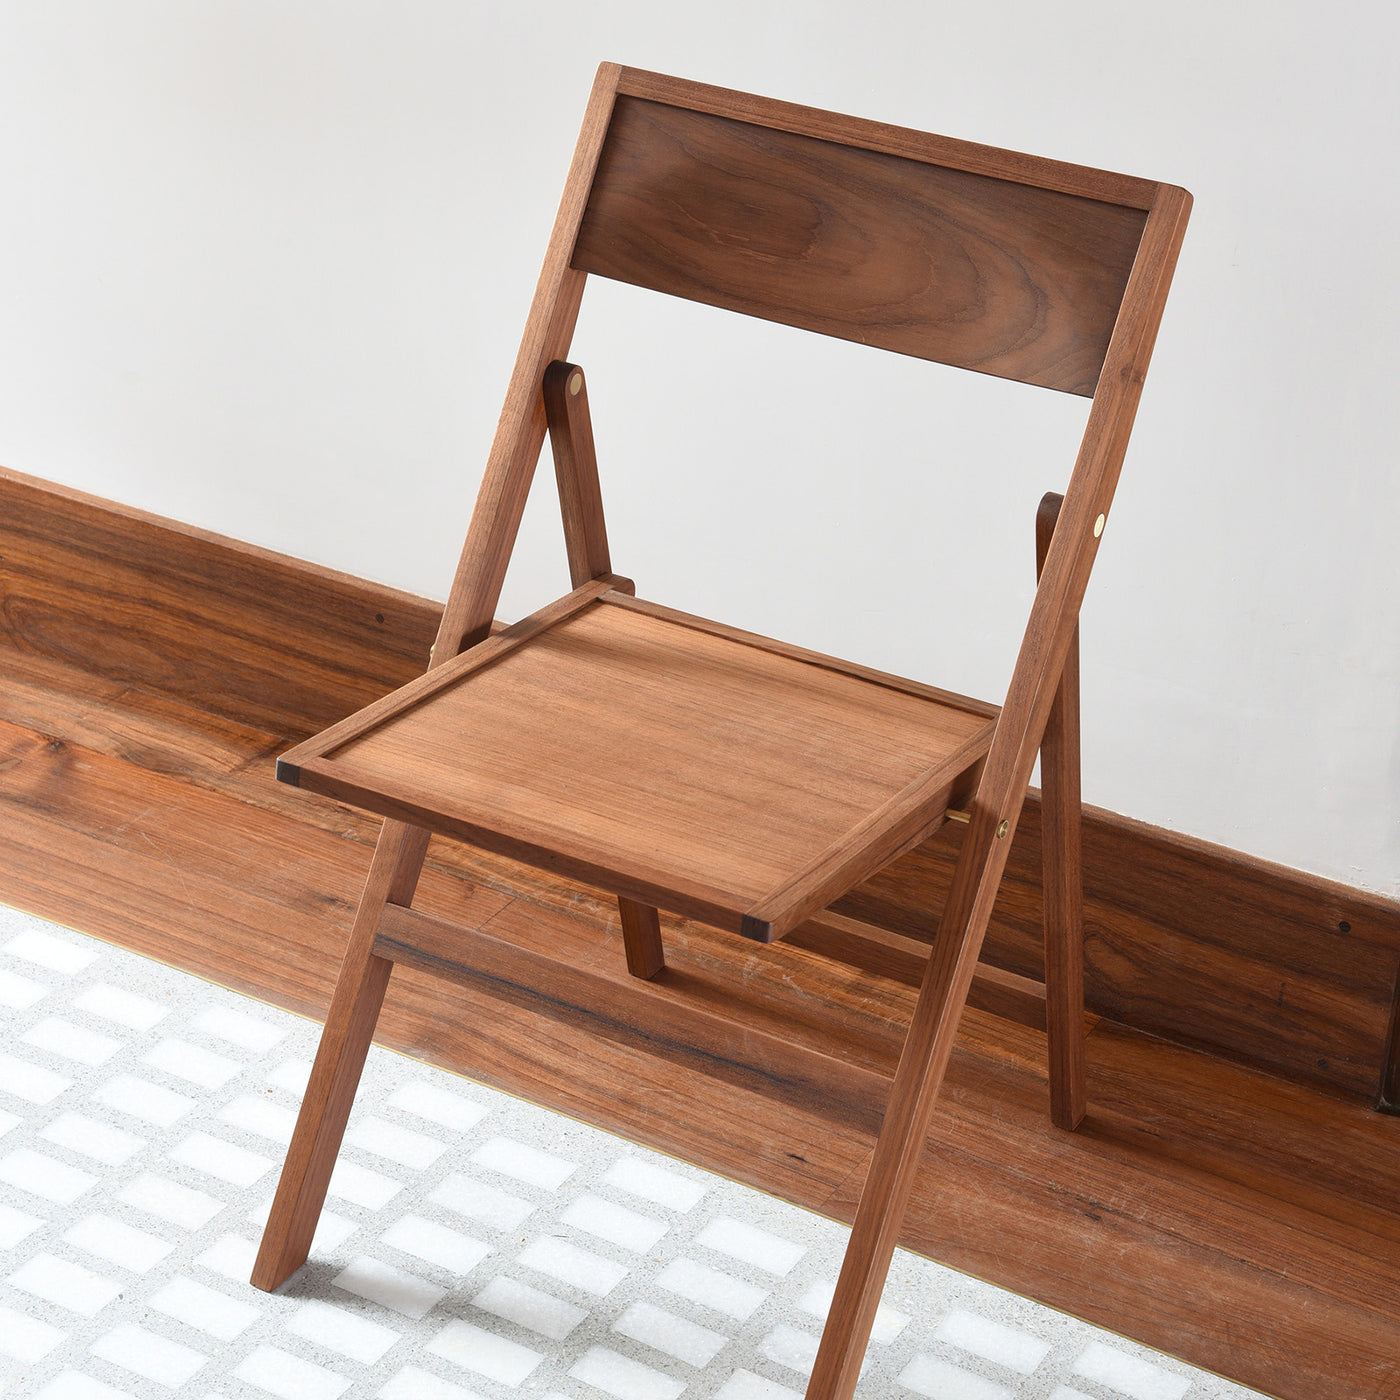 Designer Folding Flat Chair – Teak Seat